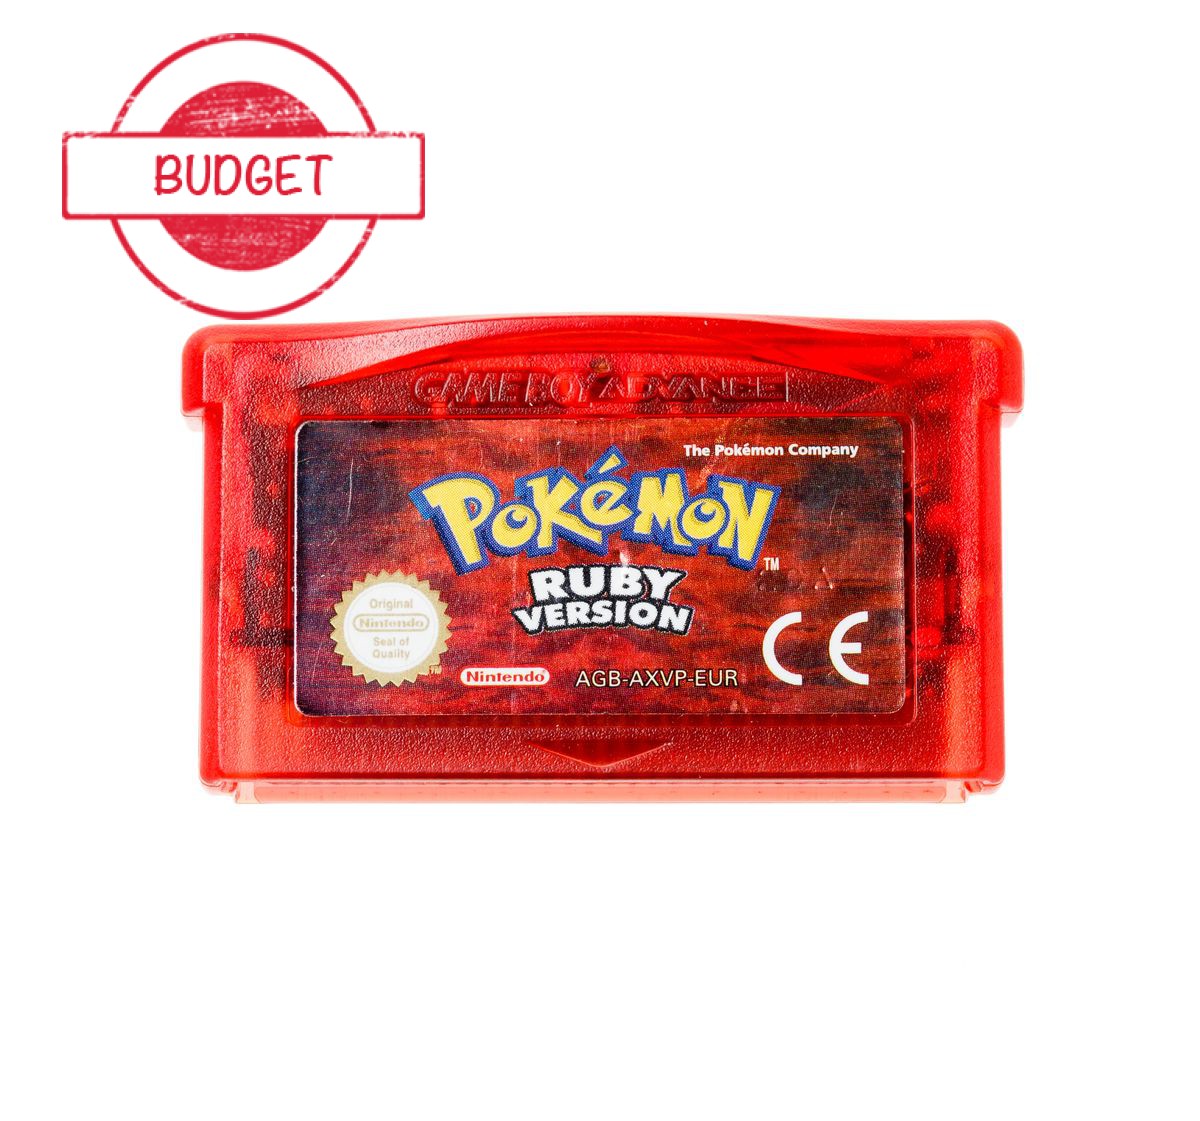 Pokemon Ruby - Budget - Gameboy Advance Games